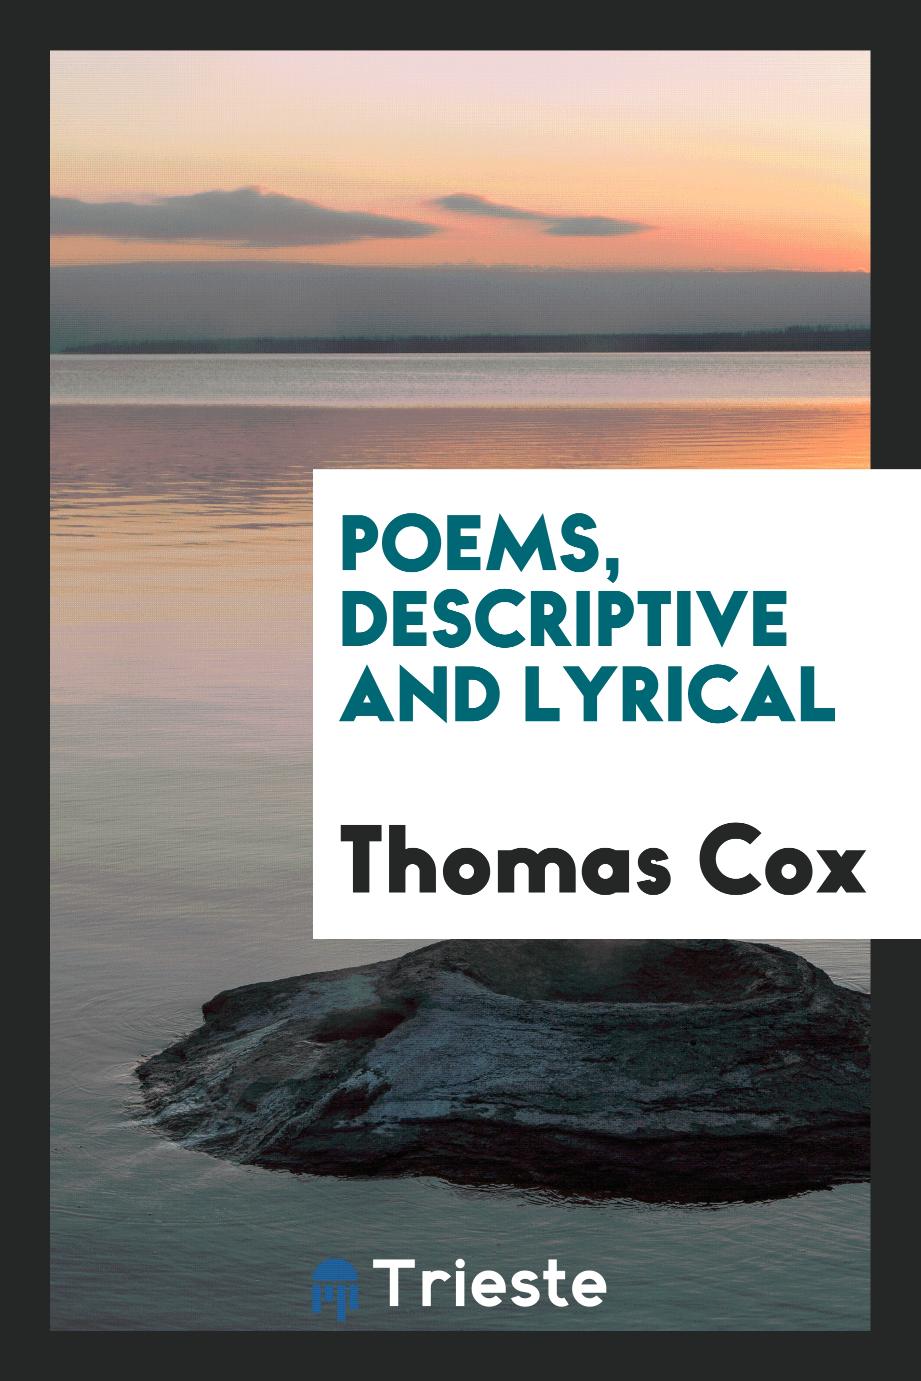 Poems, descriptive and lyrical